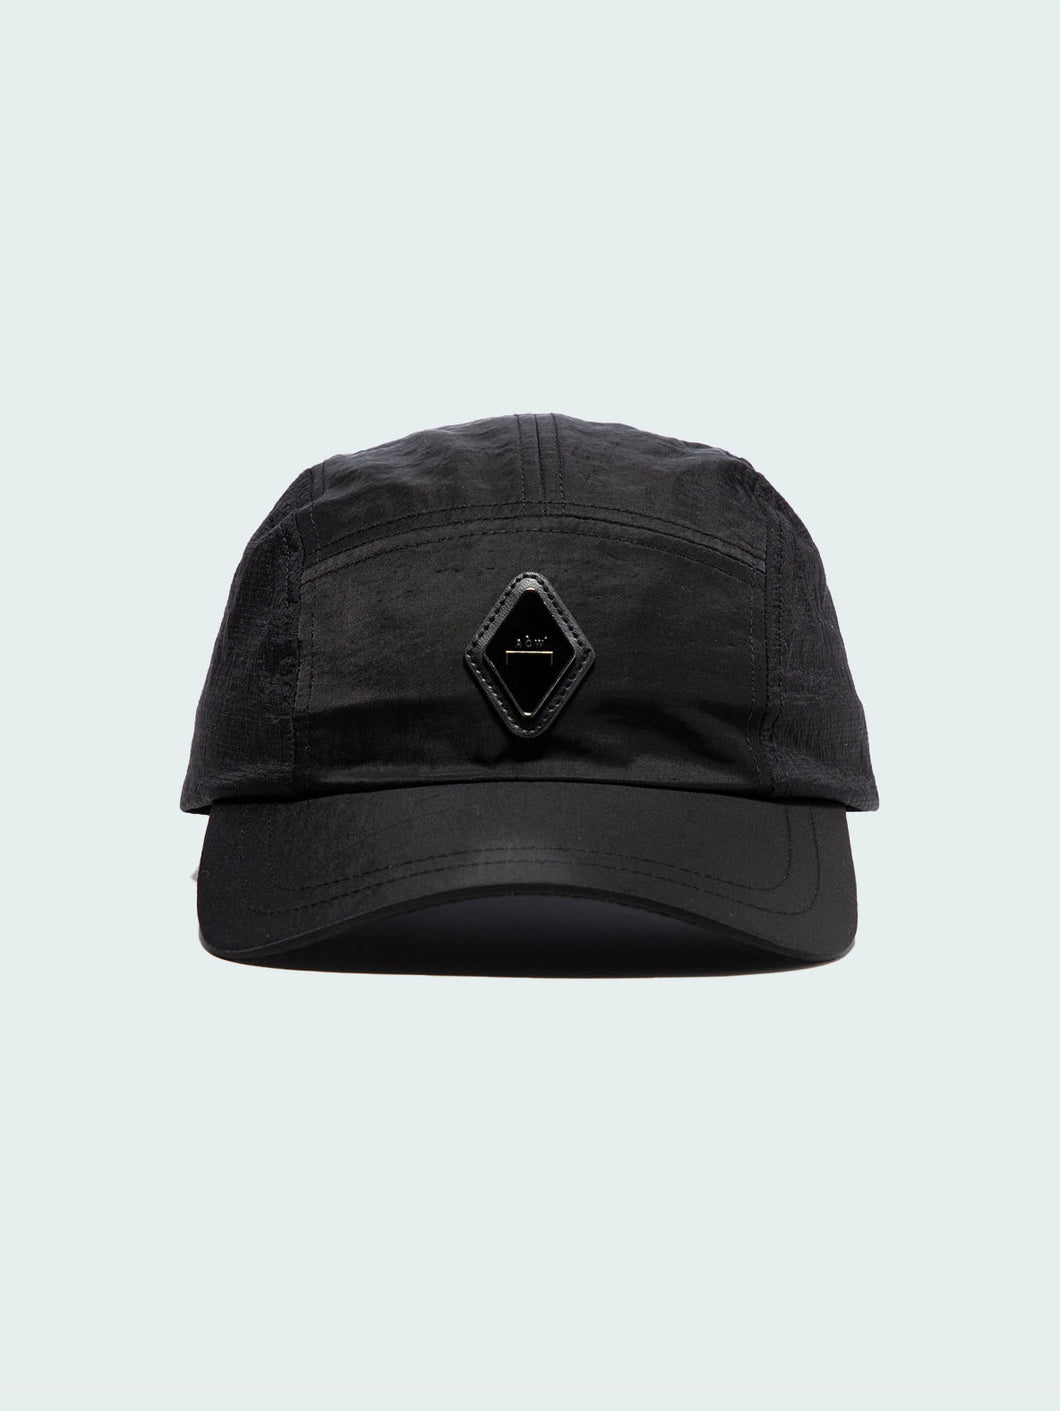 WOVEN DIAMOND CAP - BLACK